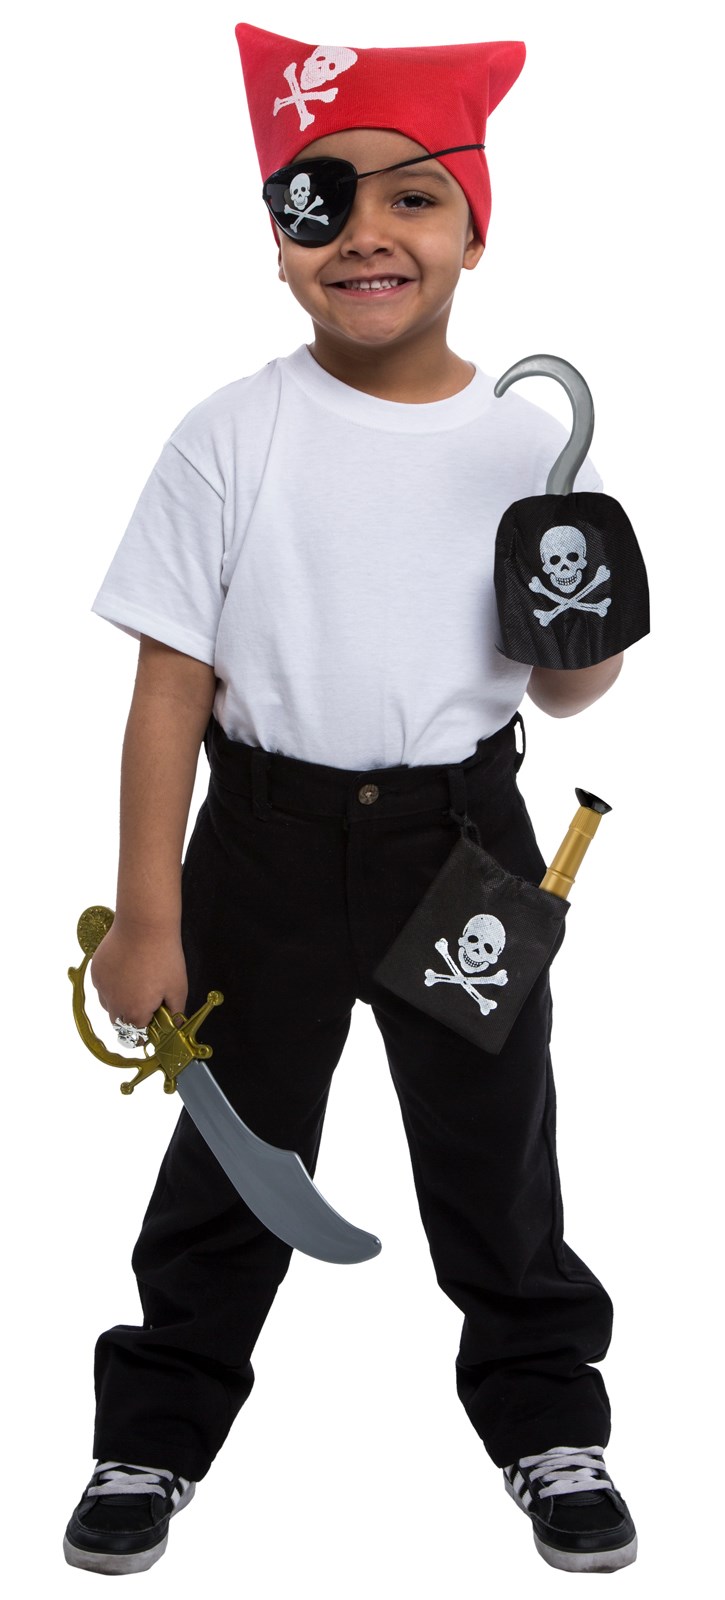 Pirate Accessory Kit